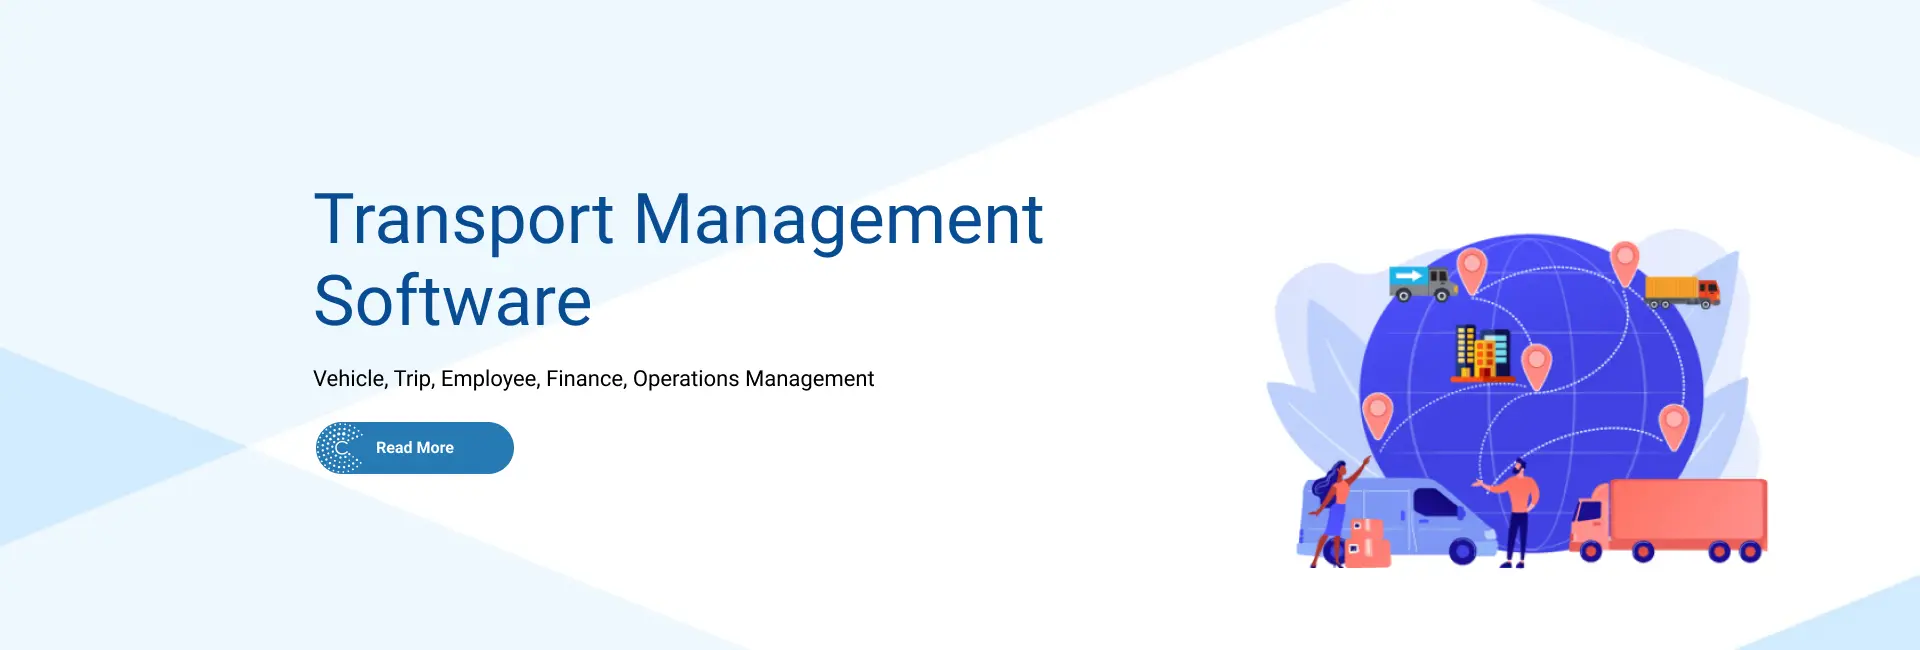 Transport Management Software - Vehicle, Trip, Employee, Finance, Operations Management